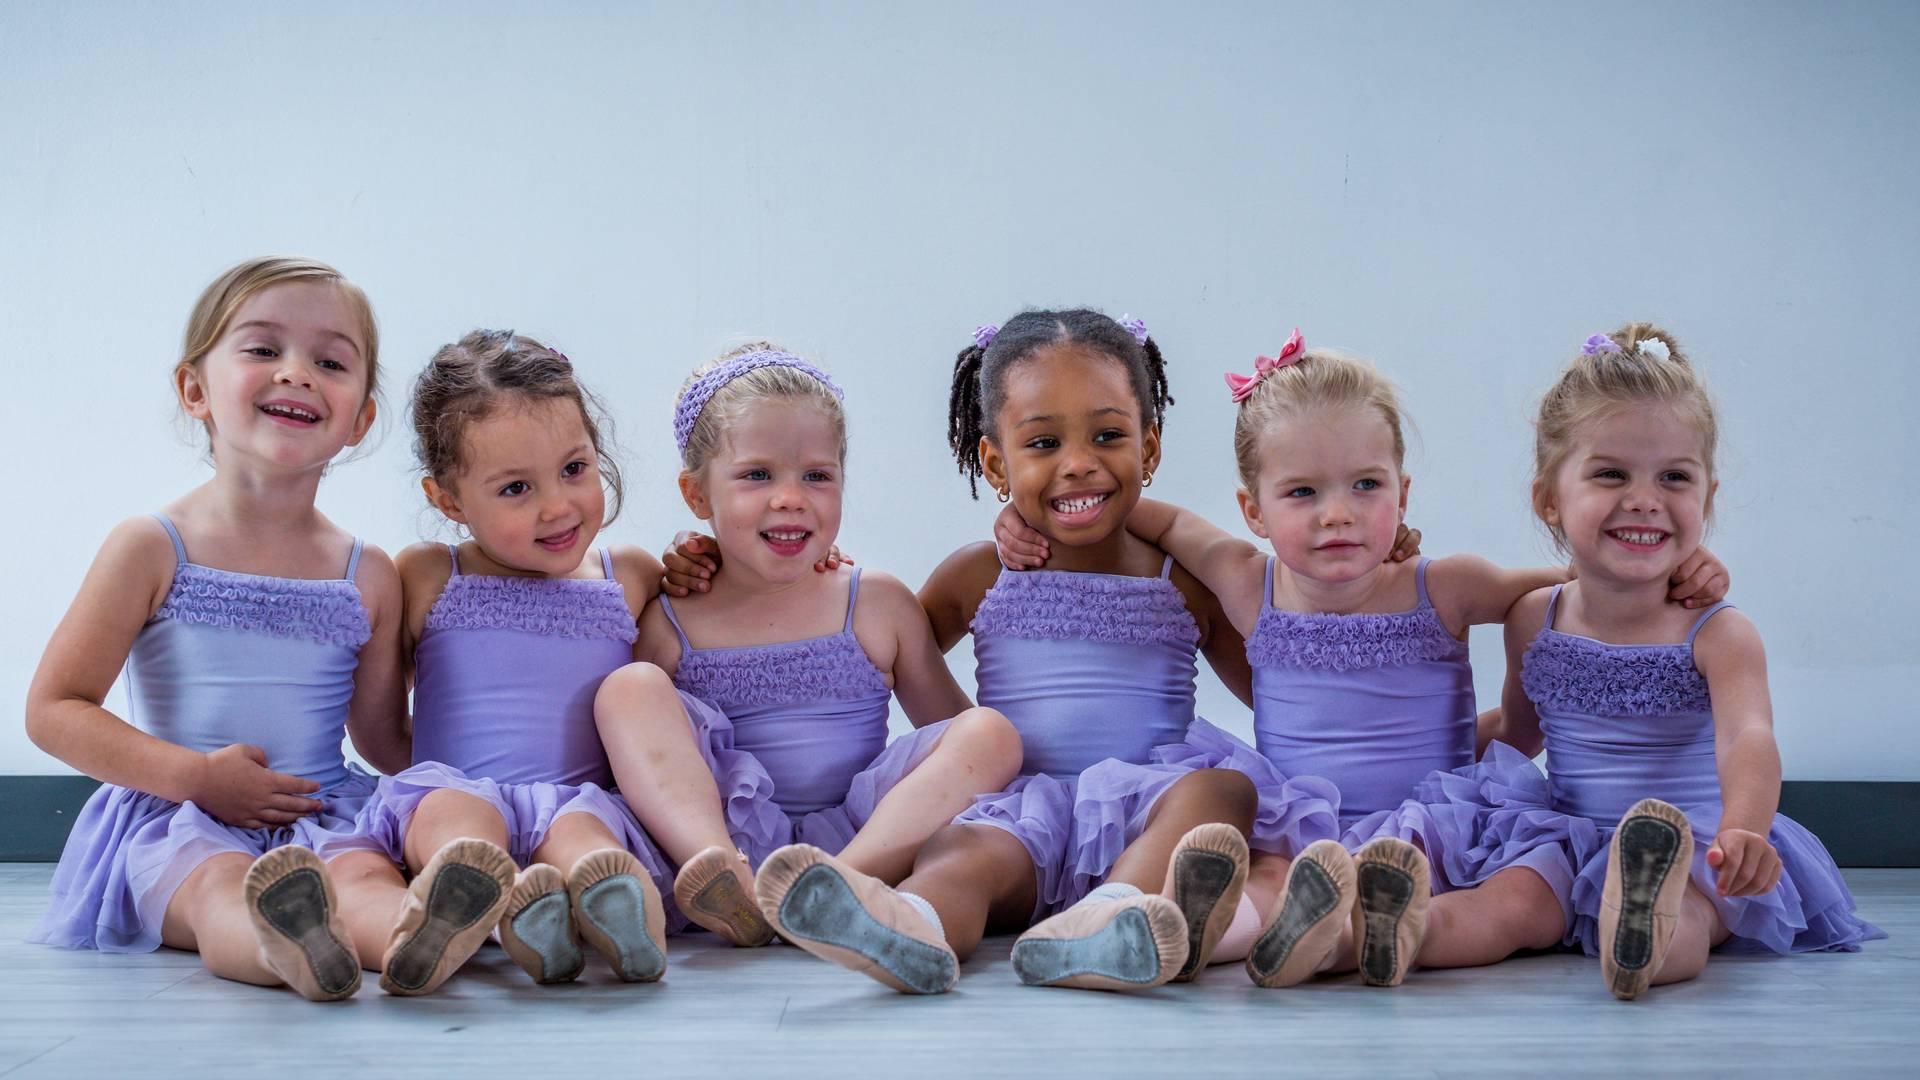 The Little Dance Academy photo